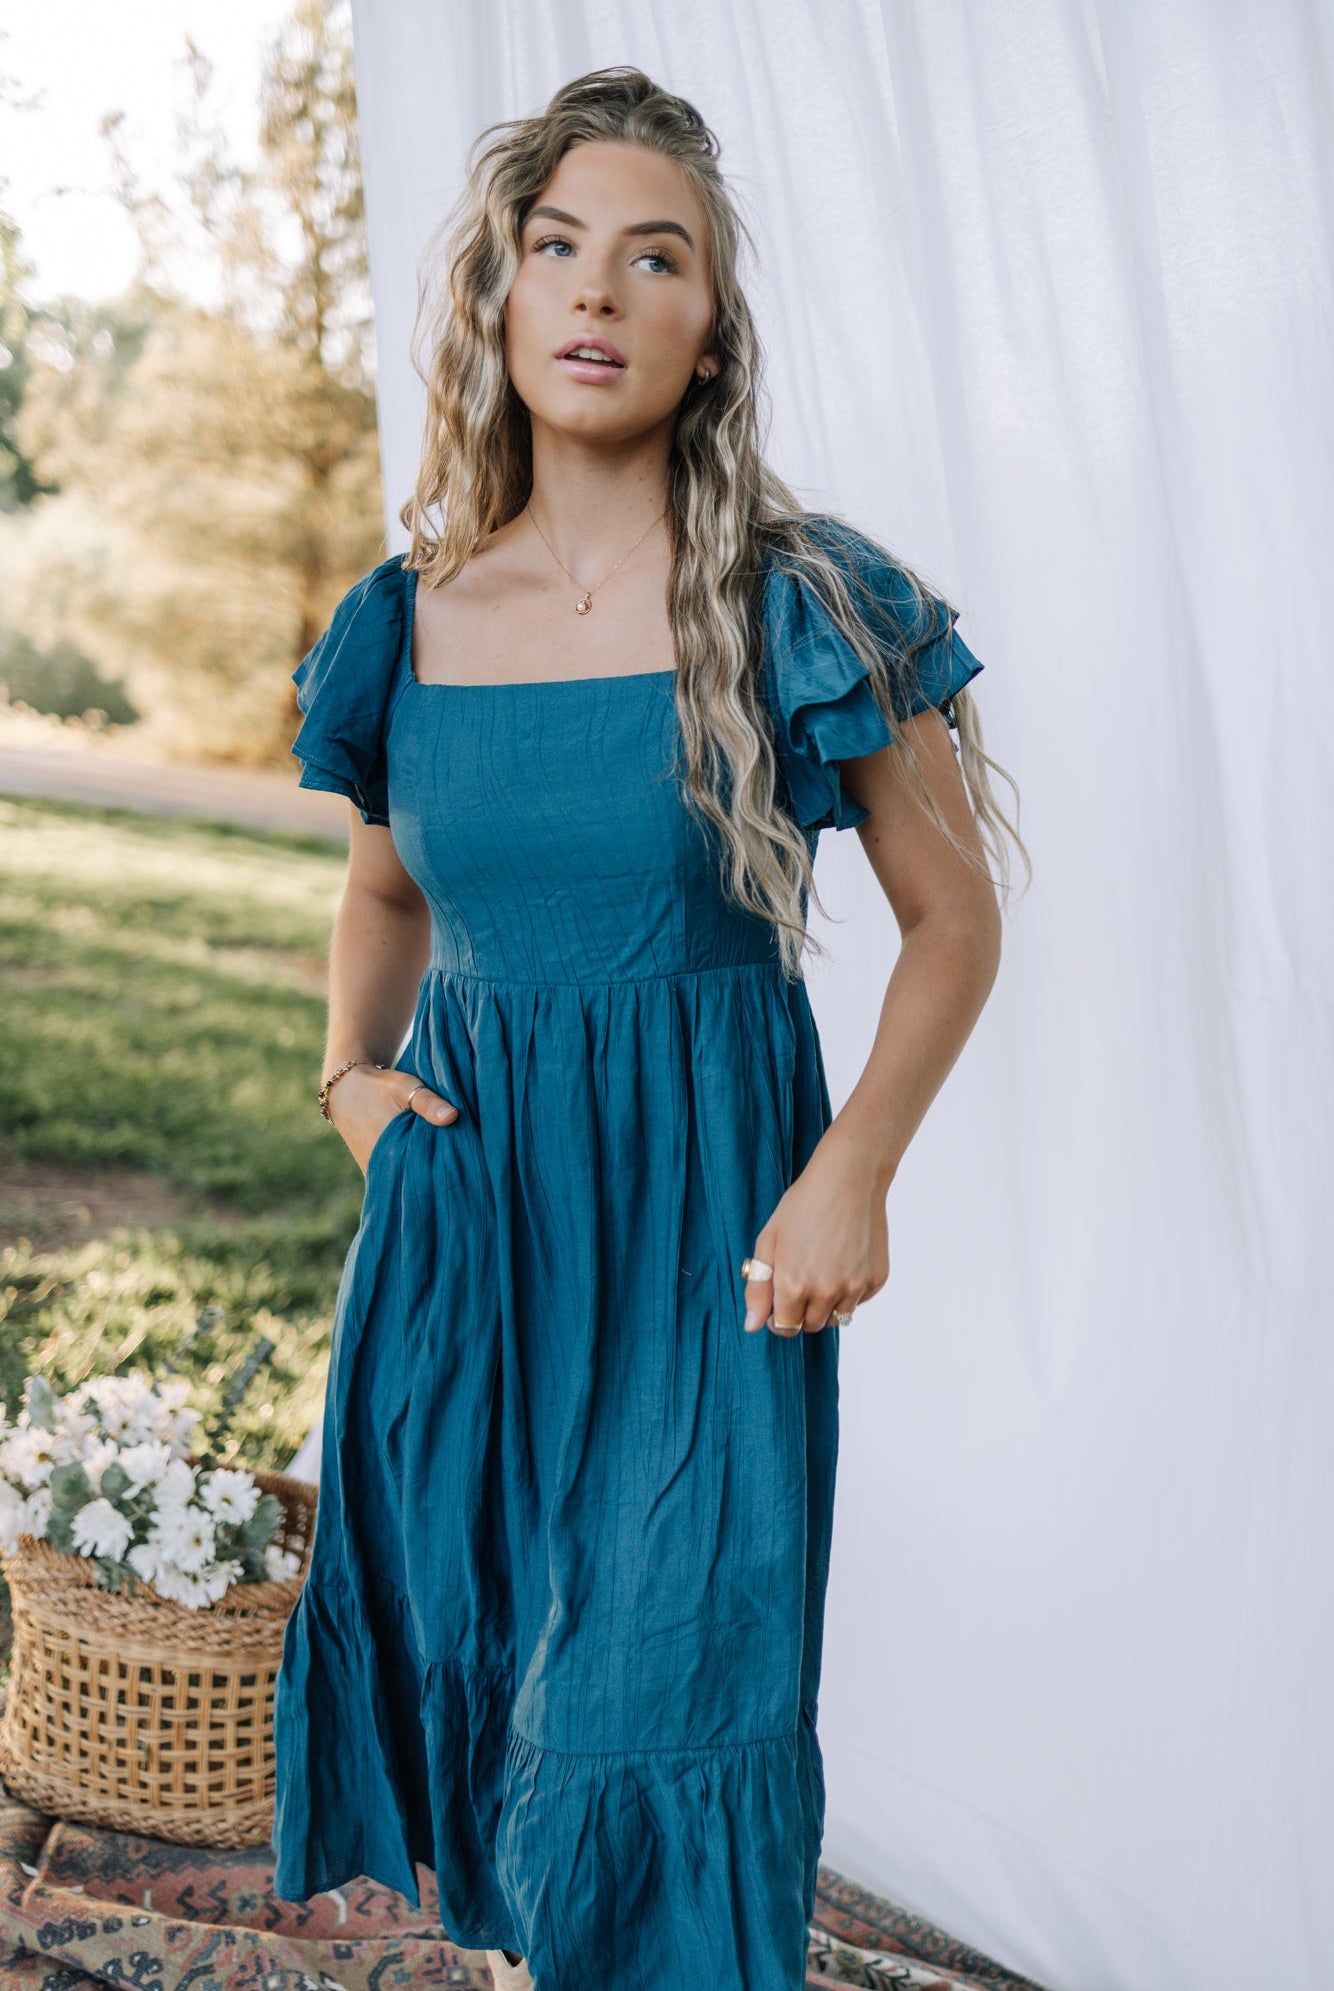 Modest blue Sunday dress